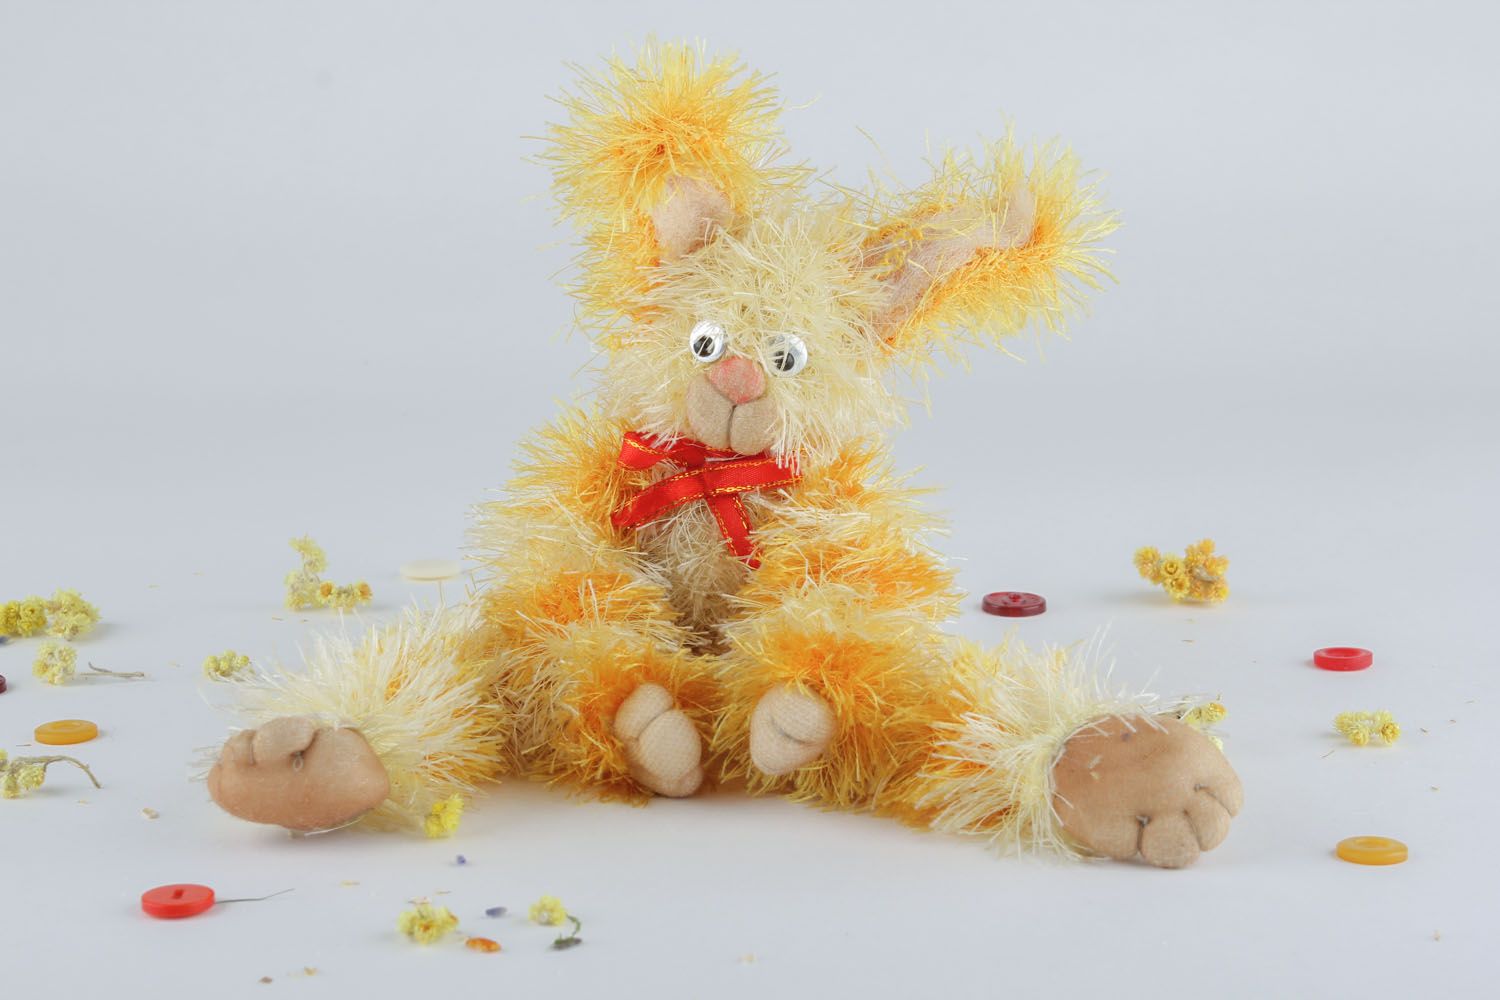 Crochet toy Rabbit photo 5